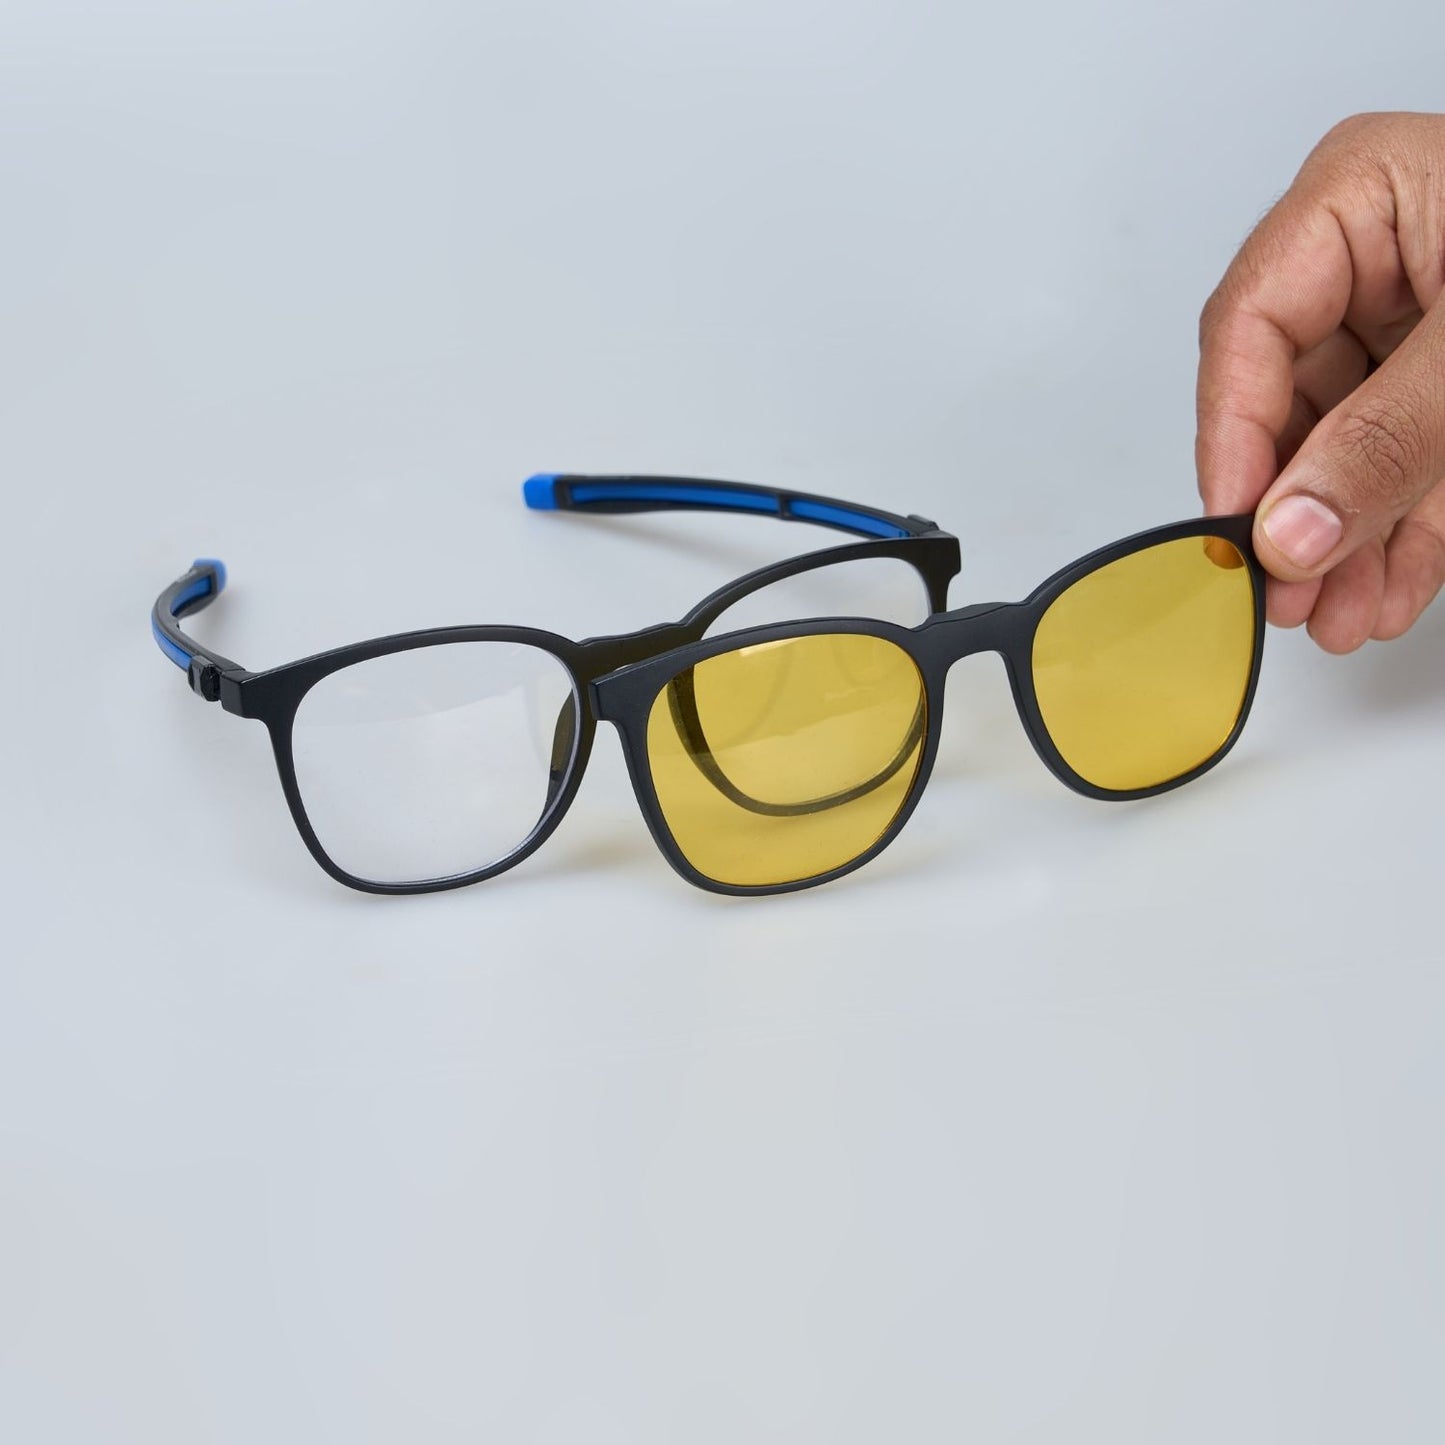 Day-Night Changeable Lens Wayfarer Sunglasses For Men And Women.